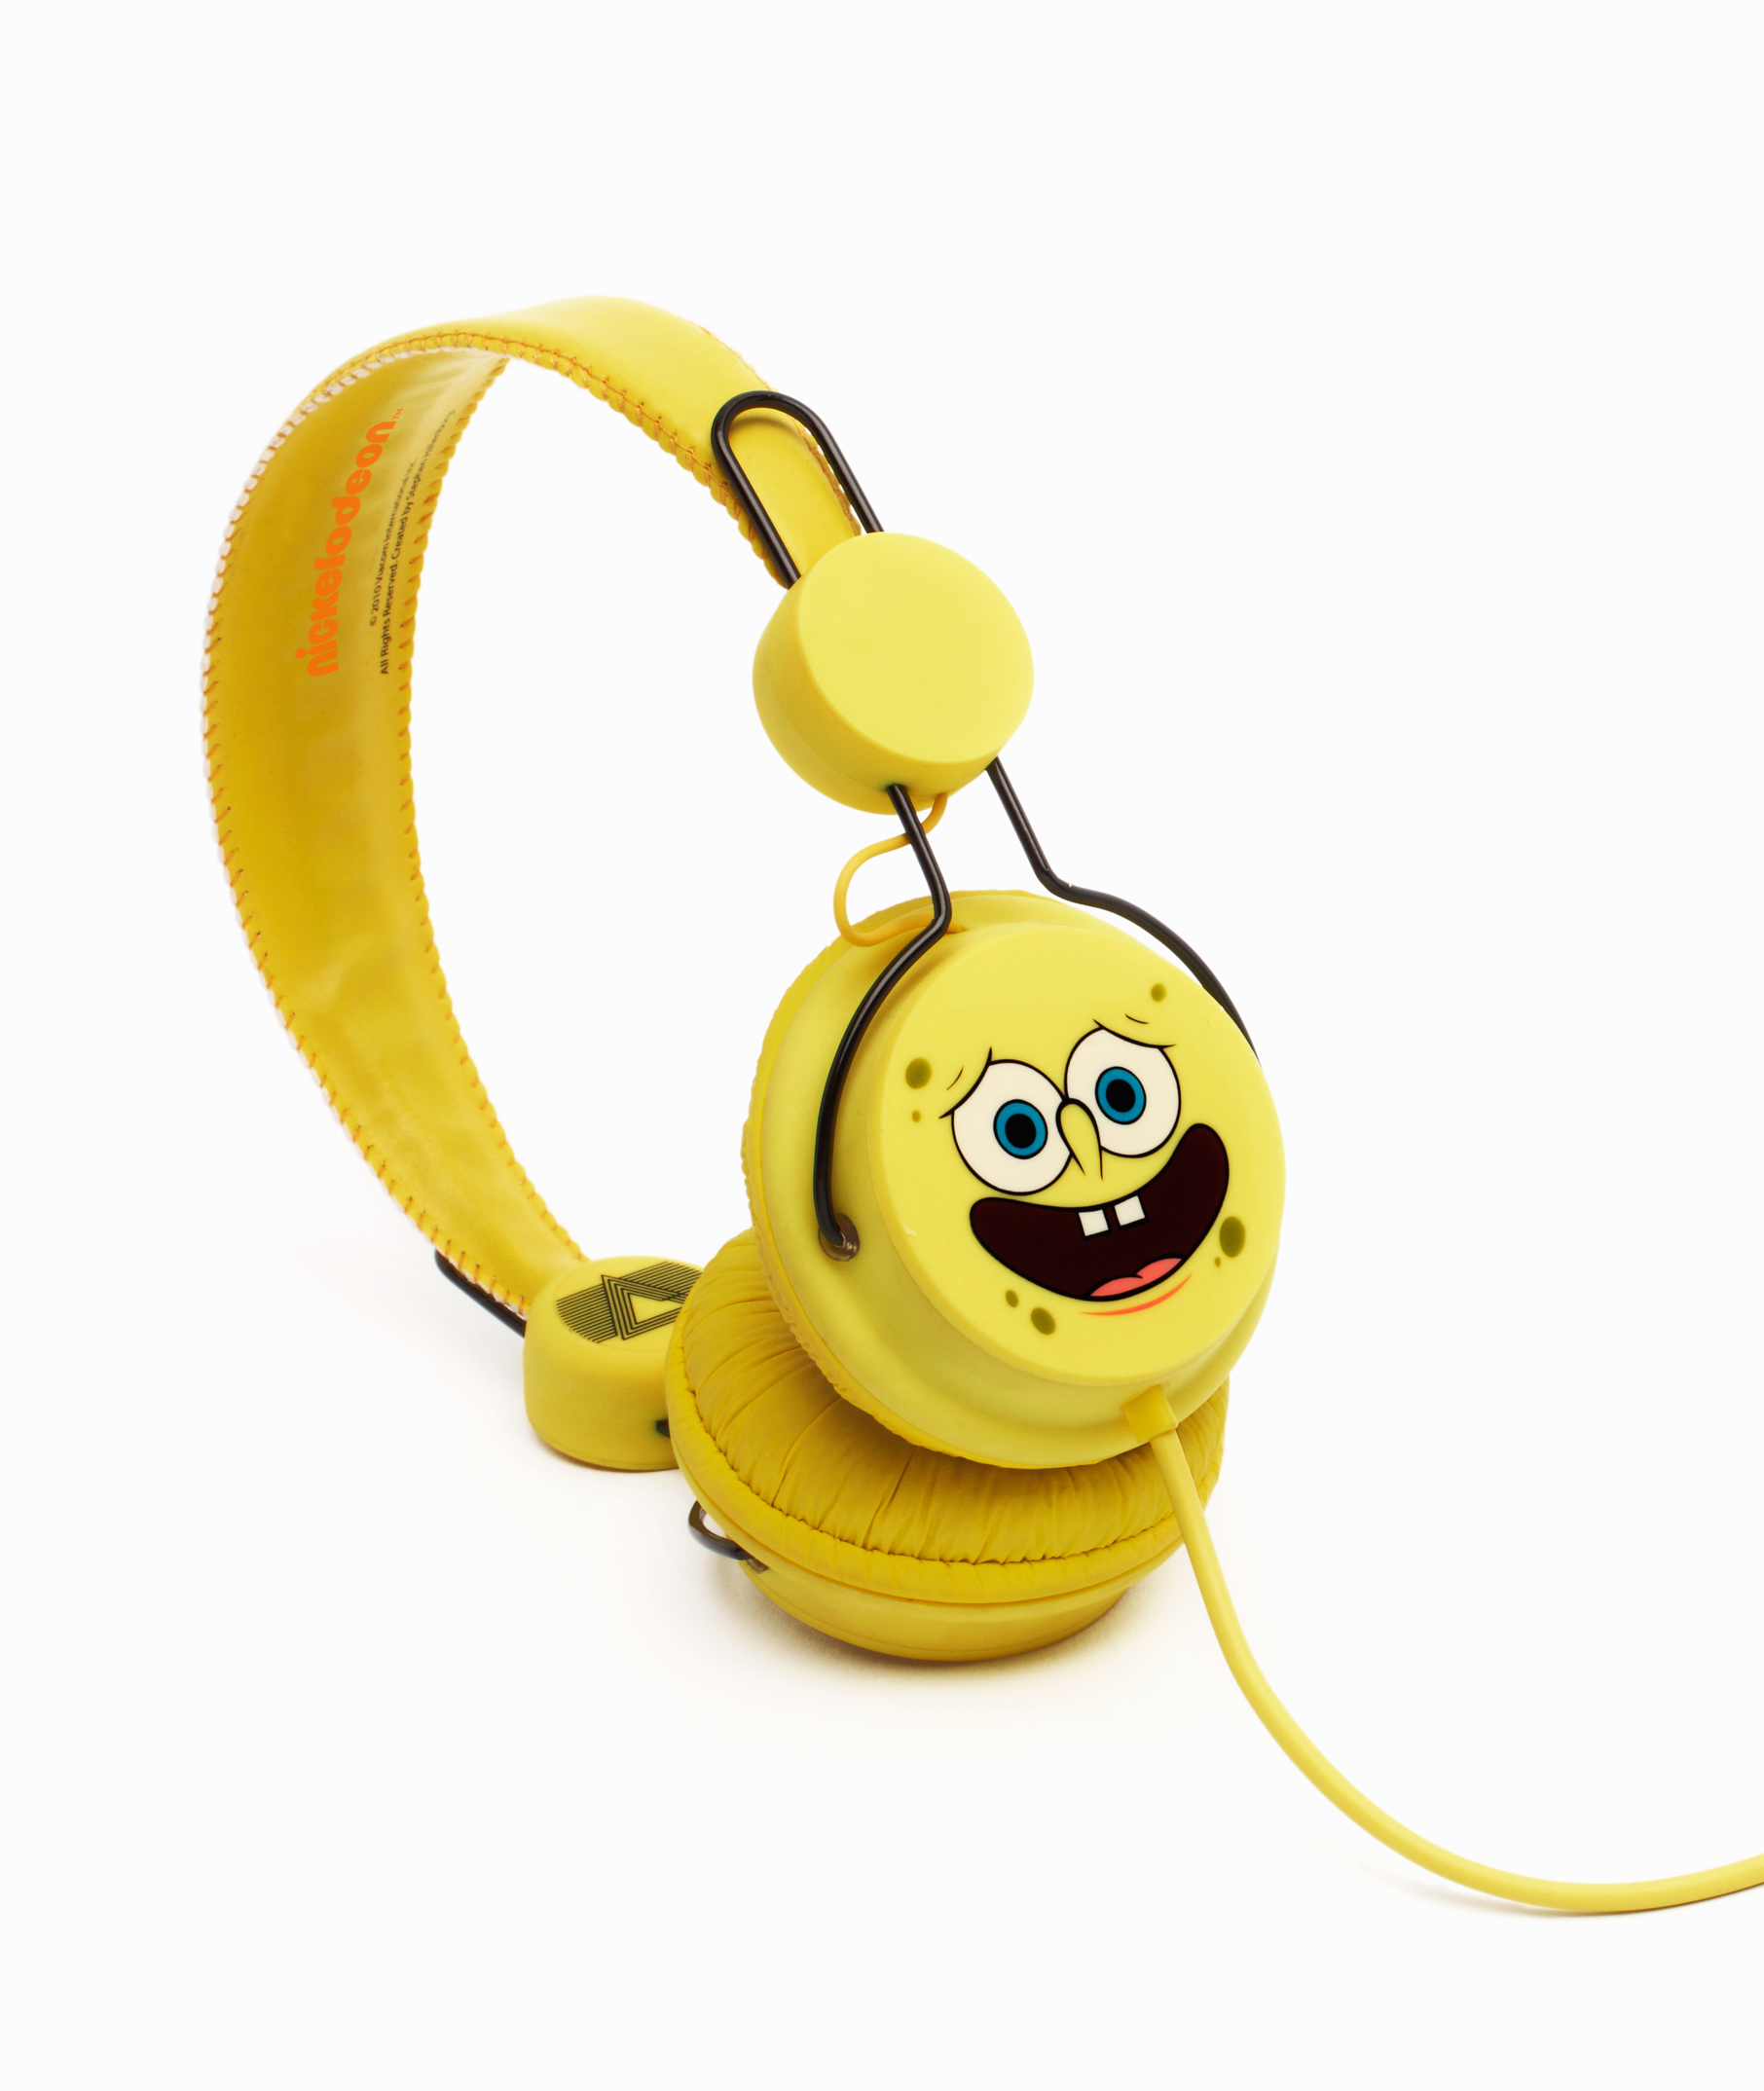 Coloud SpongeBob Squarepants Face Headphones from Coloud